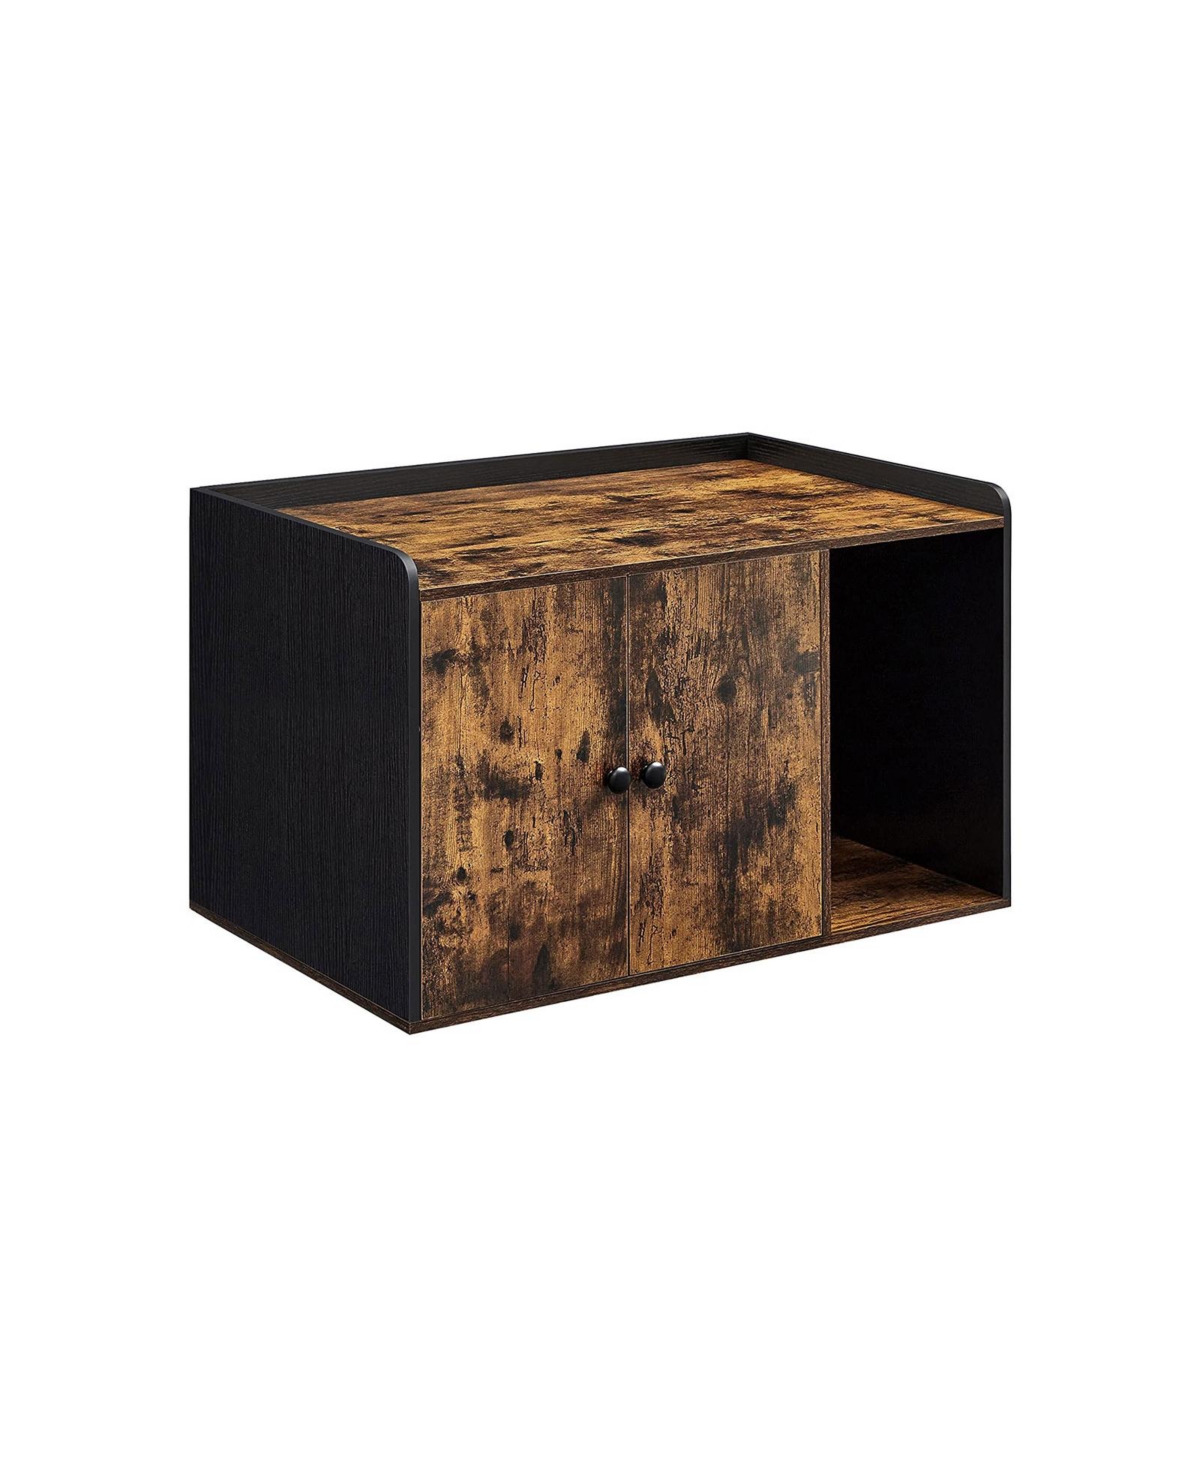 Cat Litter Box Enclosure, Wooden Hidden Cat Box Furniture, Cat Washroom With Doors - Rustic brown